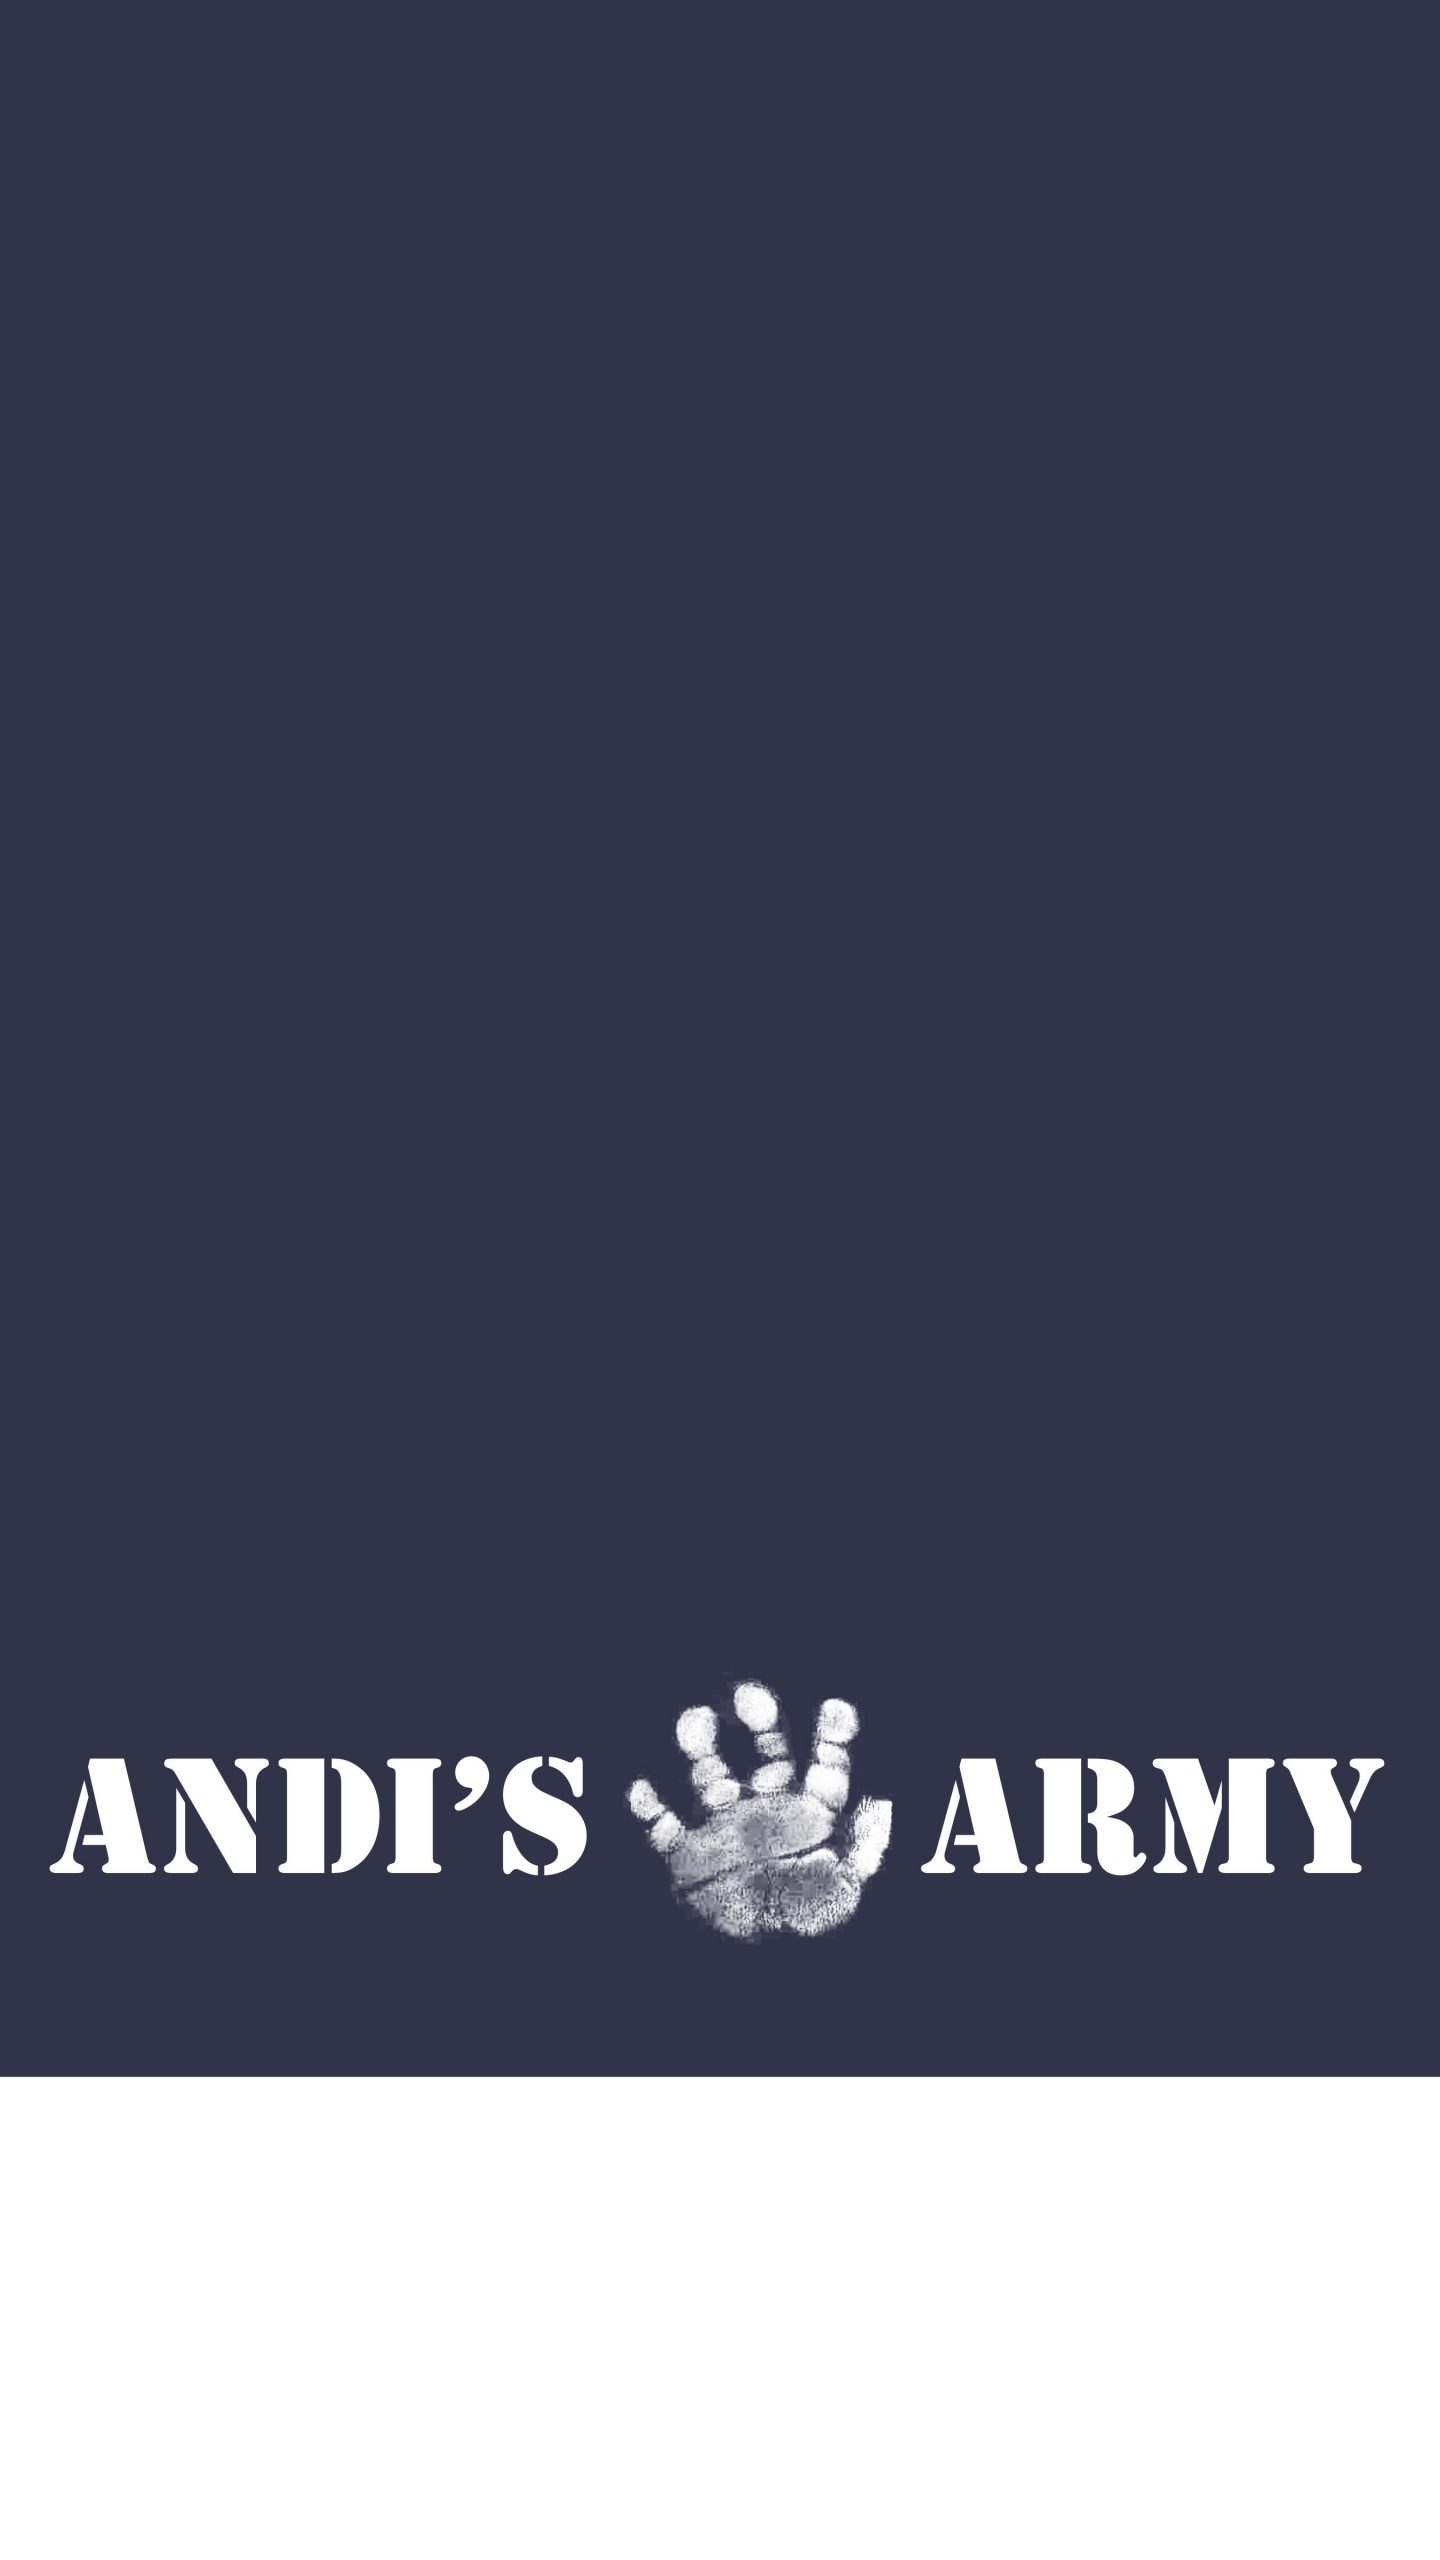 Andi's Army Golf Tournament